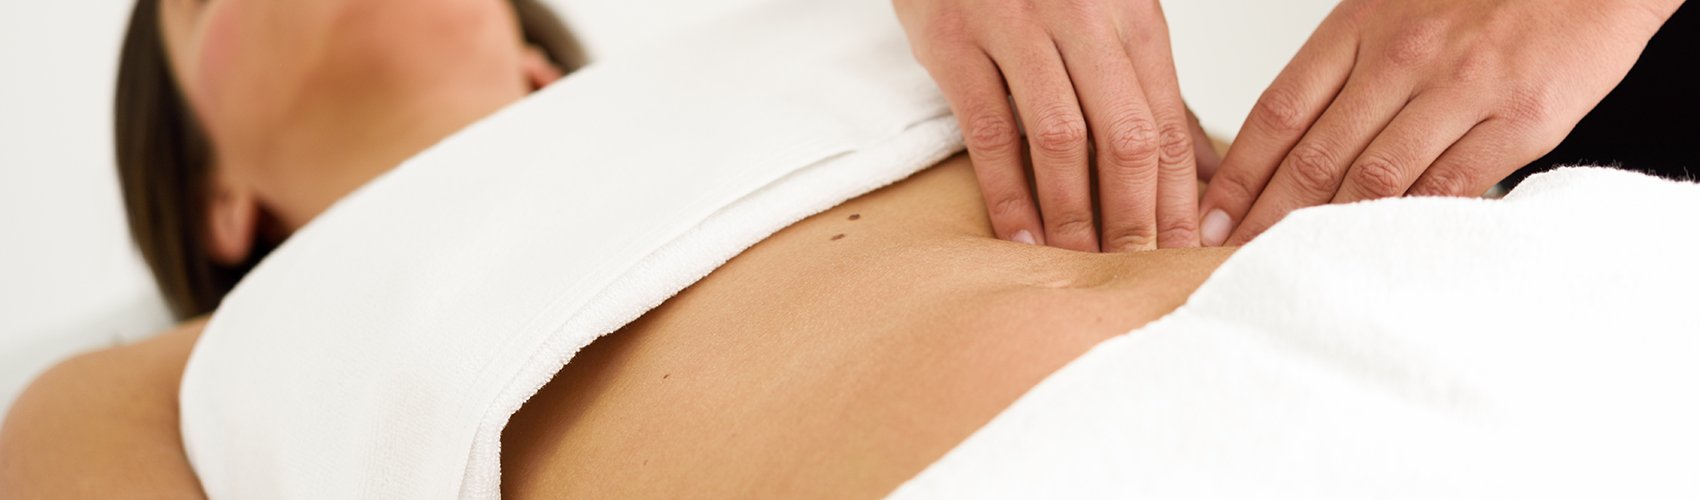 Ovary Care Massage in Dubai